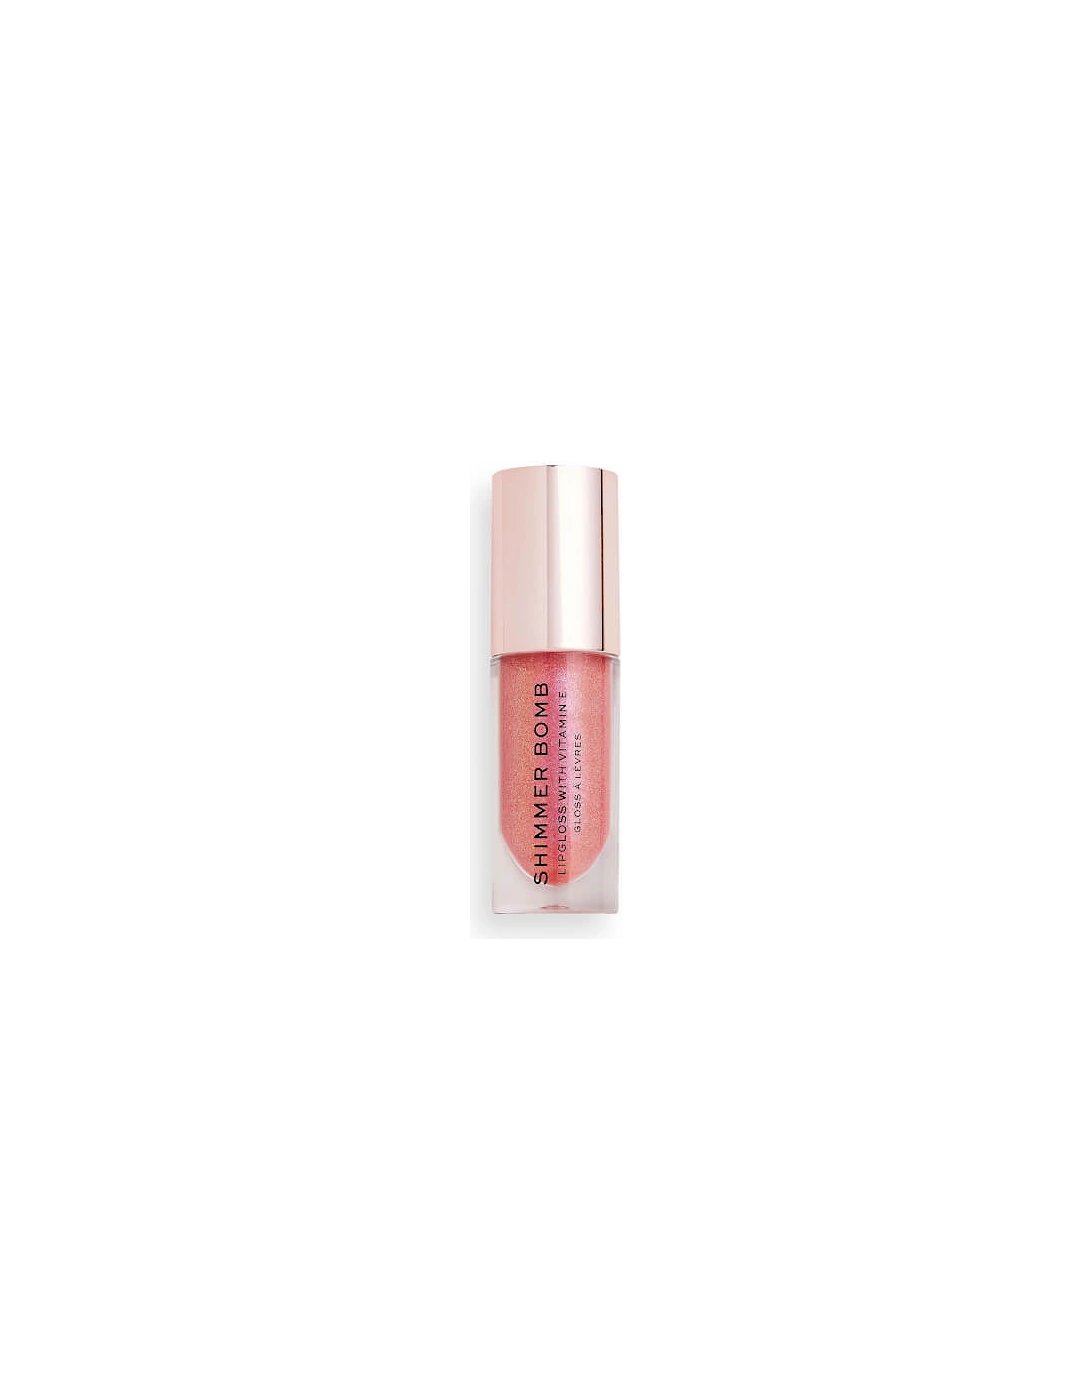 Makeup Shimmer Bomb Lip Gloss - Daydream, 2 of 1